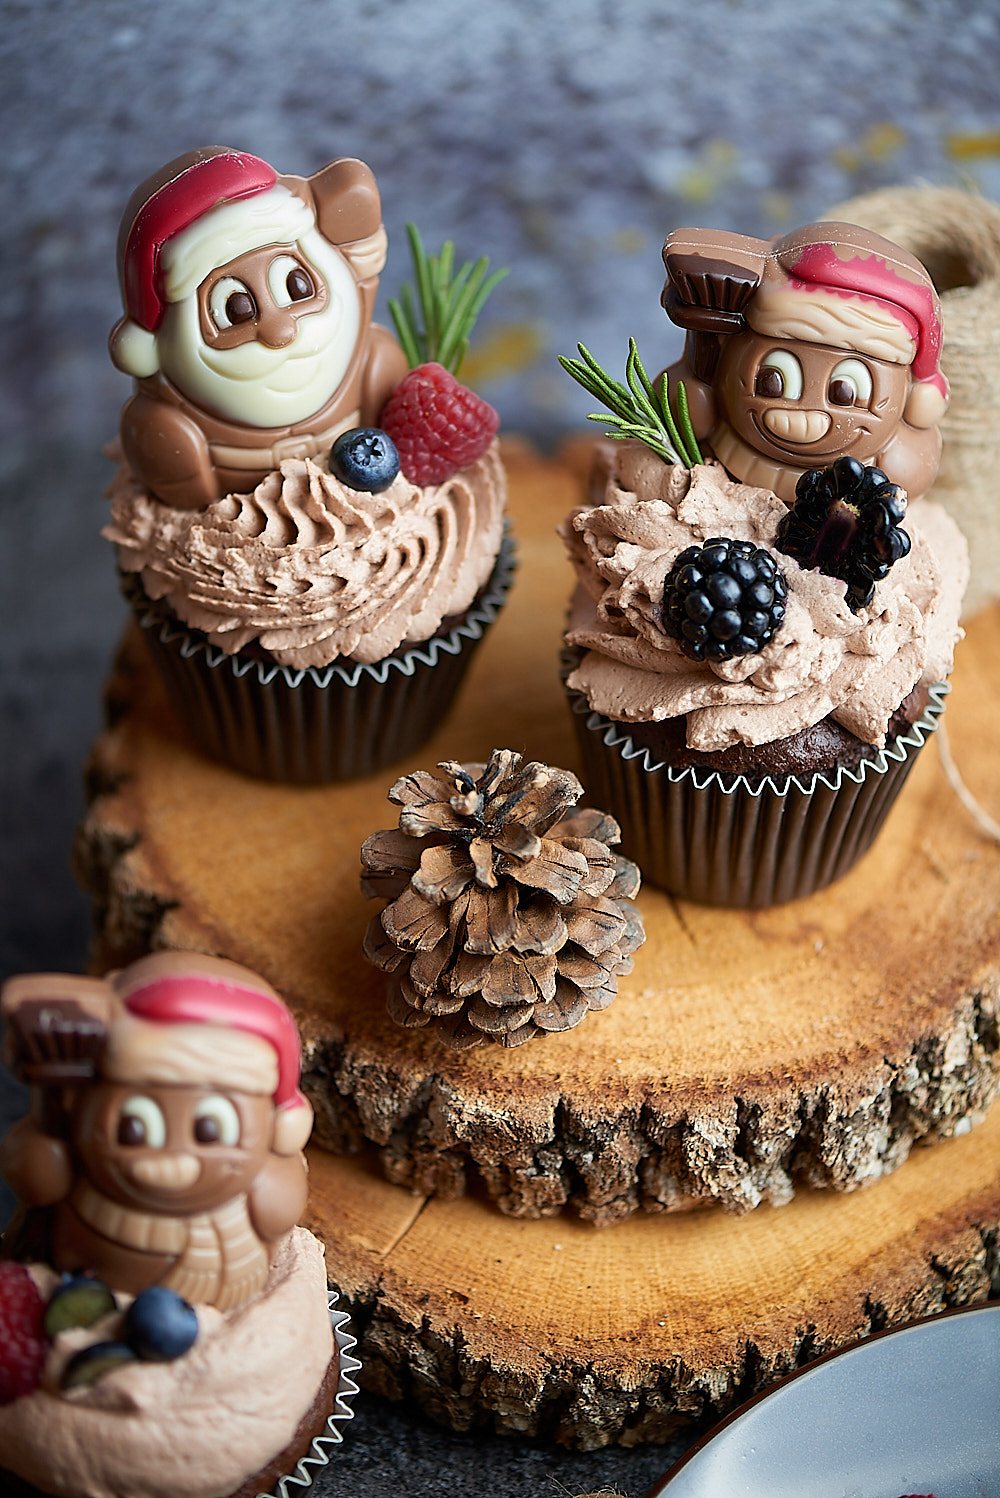 photo culinaire de cupcakes de Noël